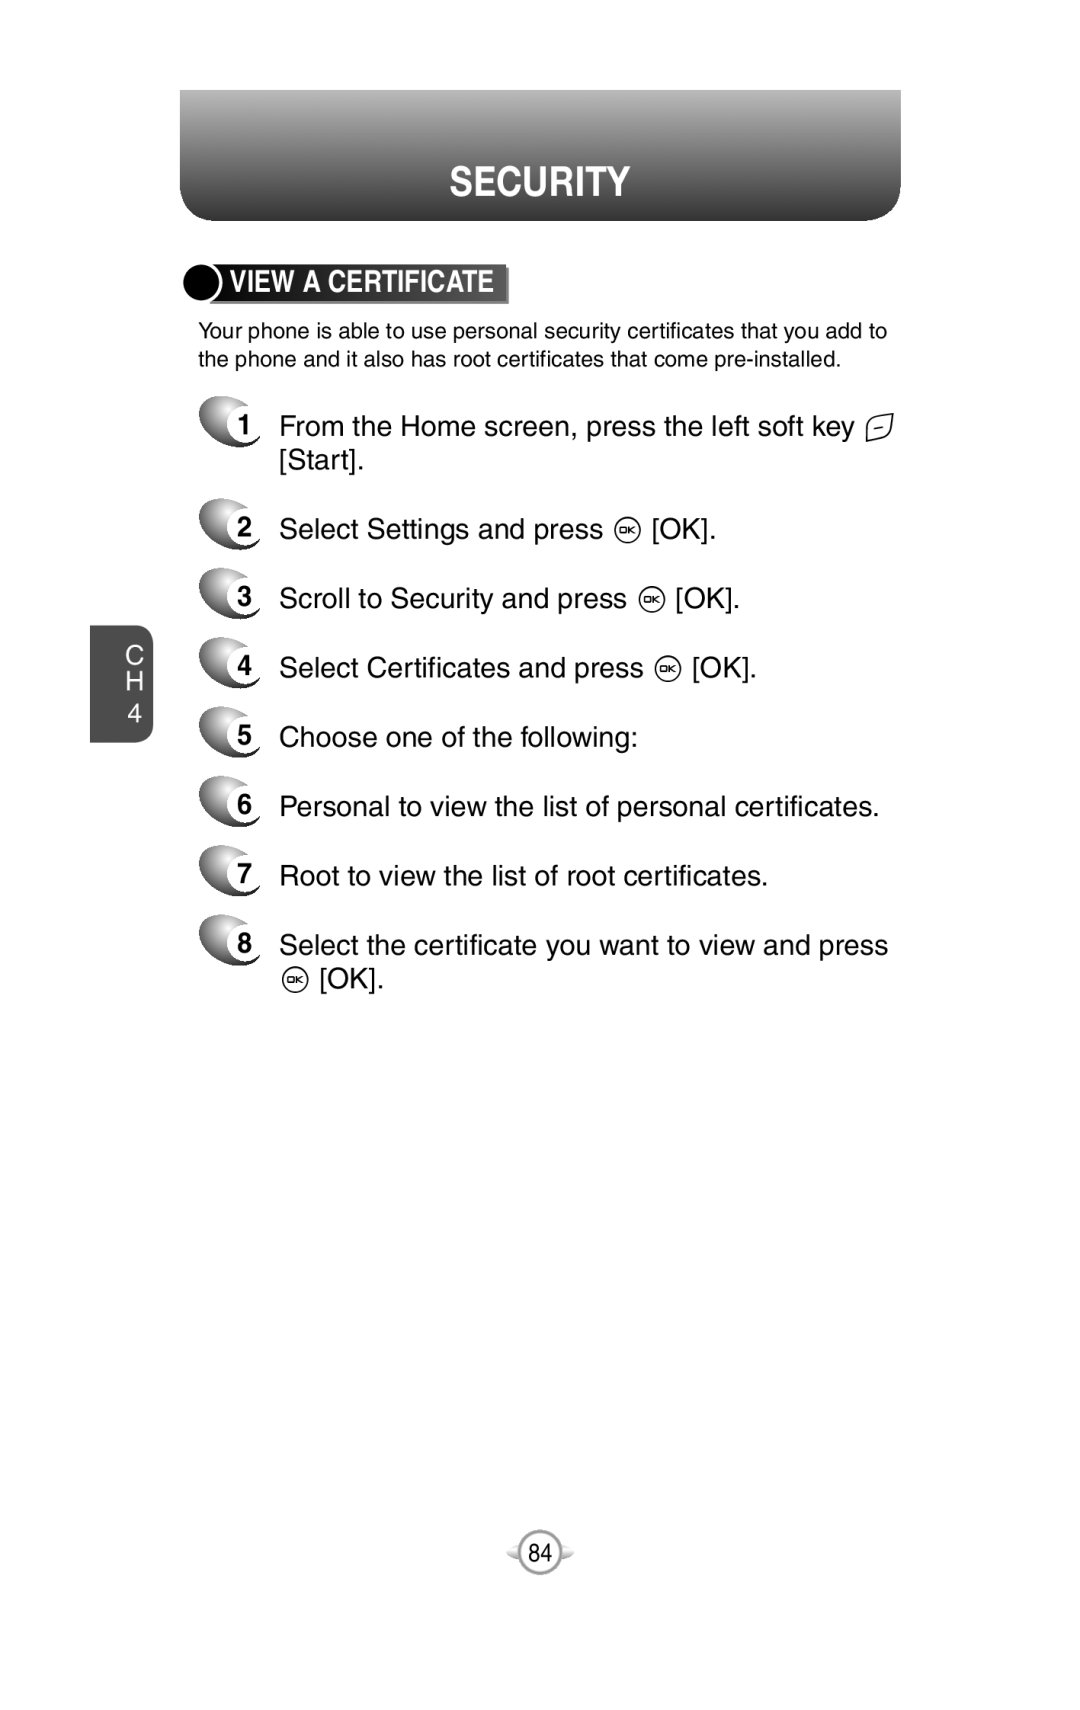 UTStarcom PN-820 user manual View A Certificate, Security 